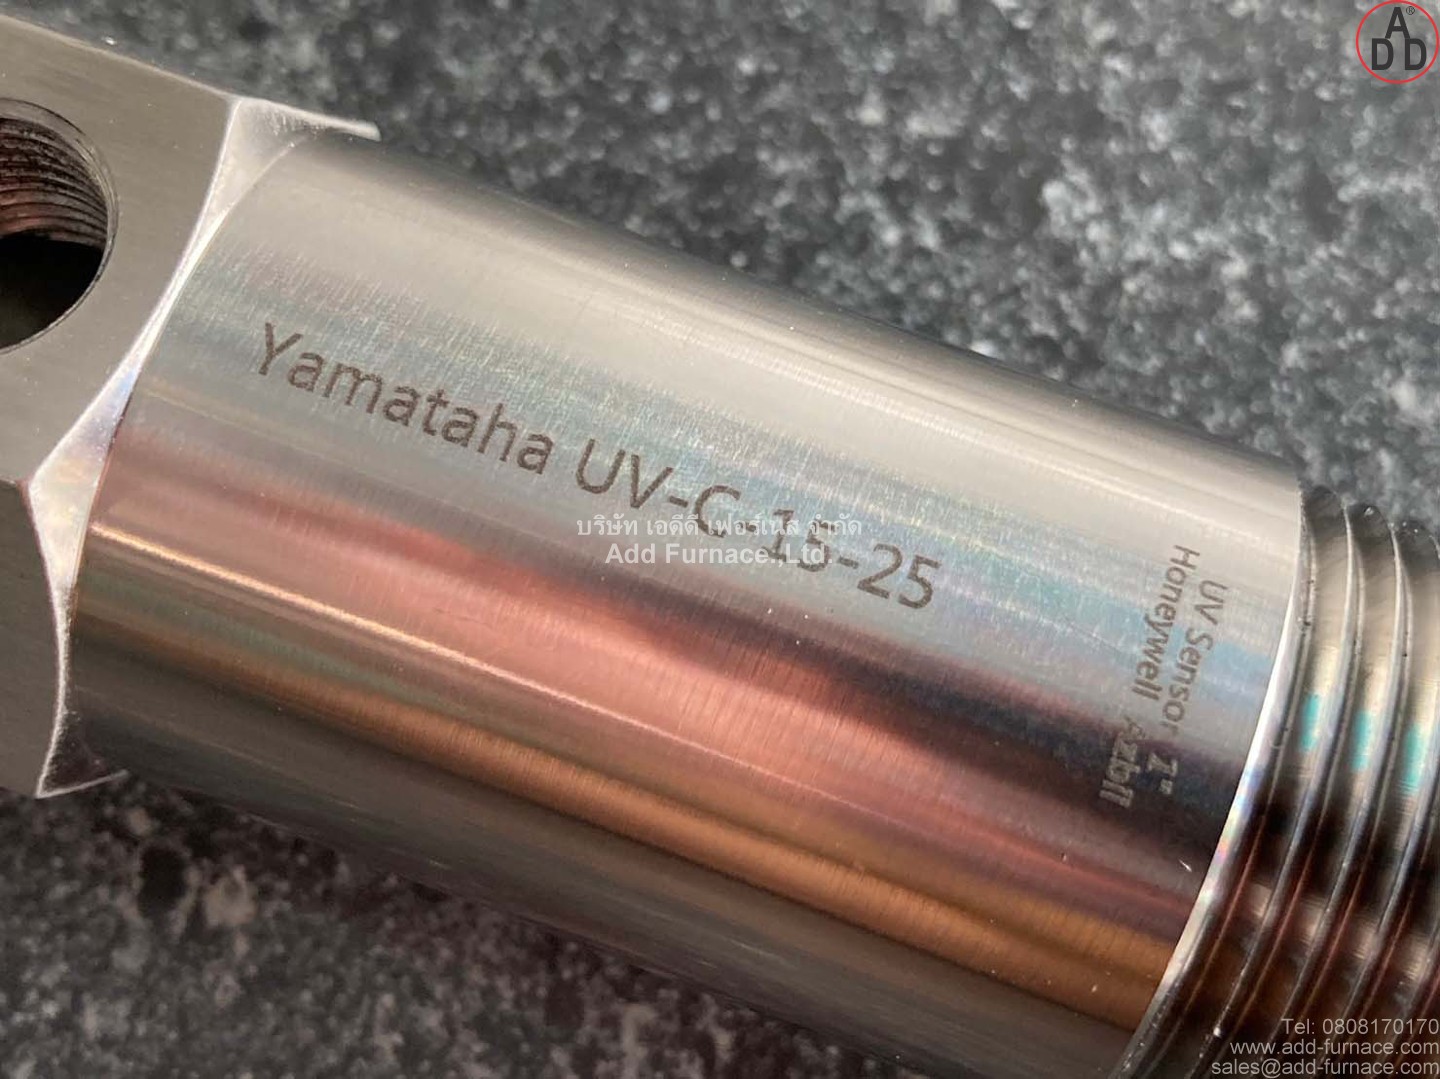 Yamataha UV-C-15-25(5)